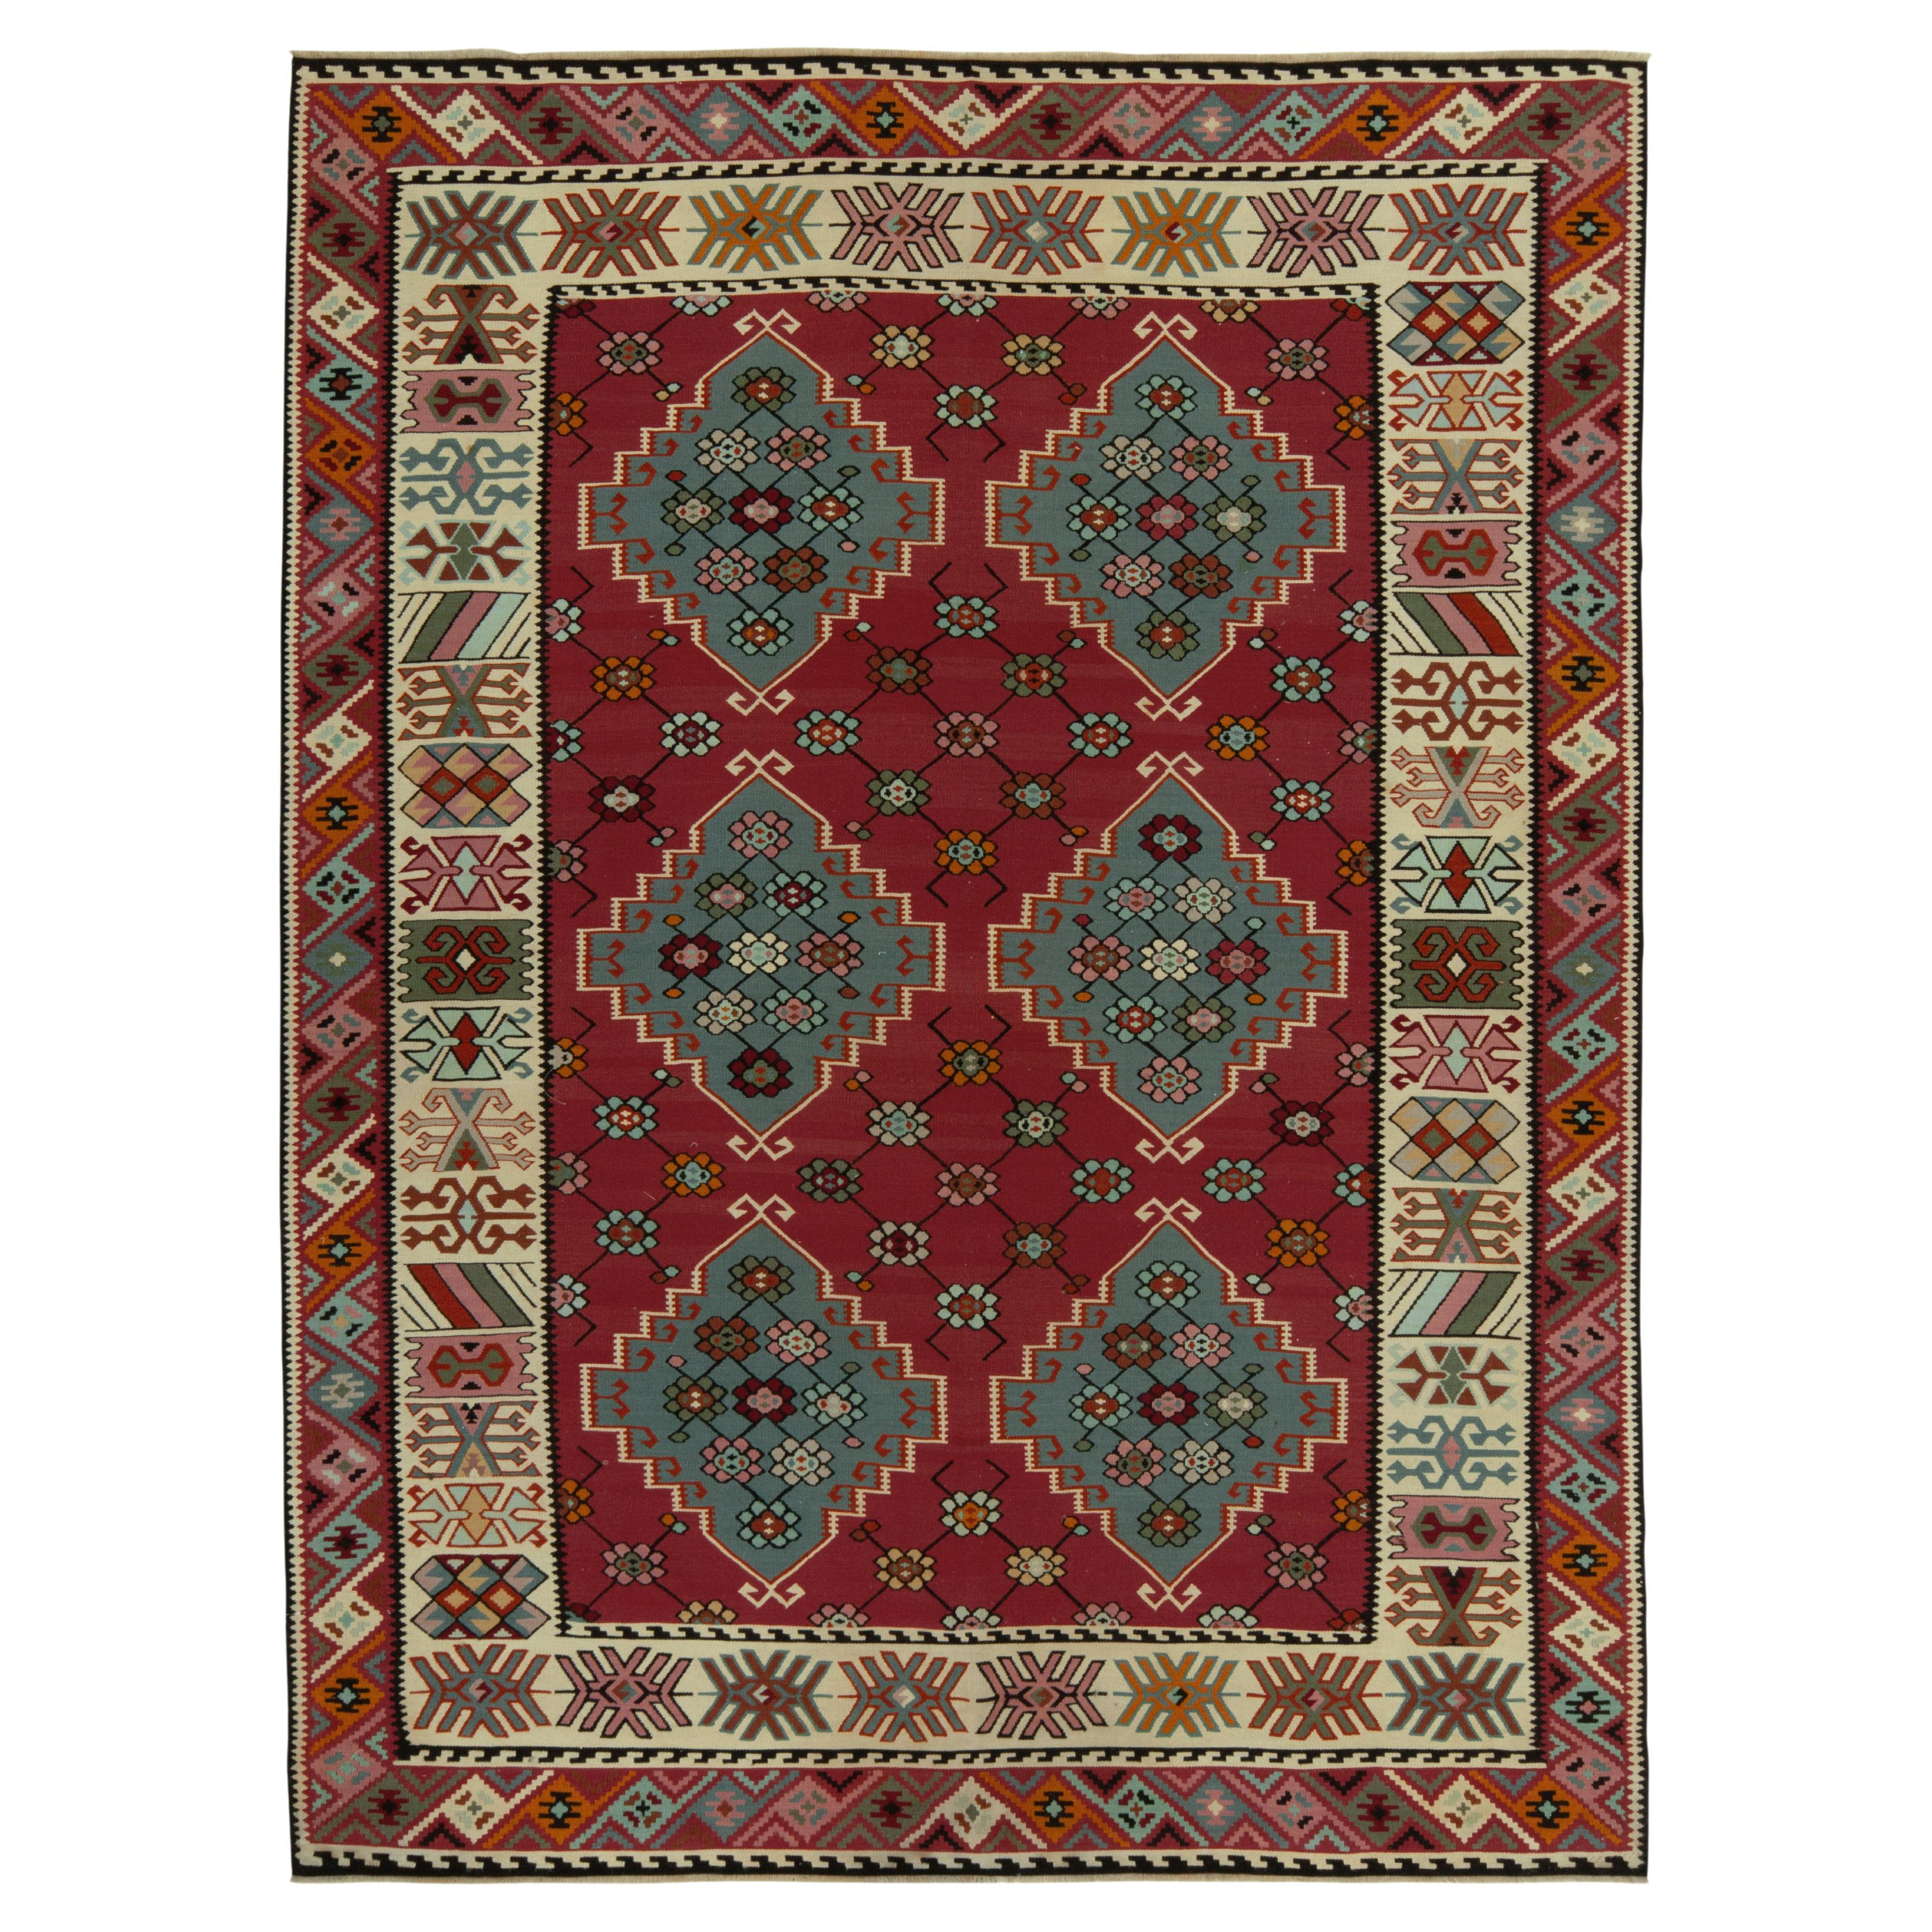 Antique Persian Kilim rug in Burgundy & Blue Geometric pattern by Rug & Kilim For Sale